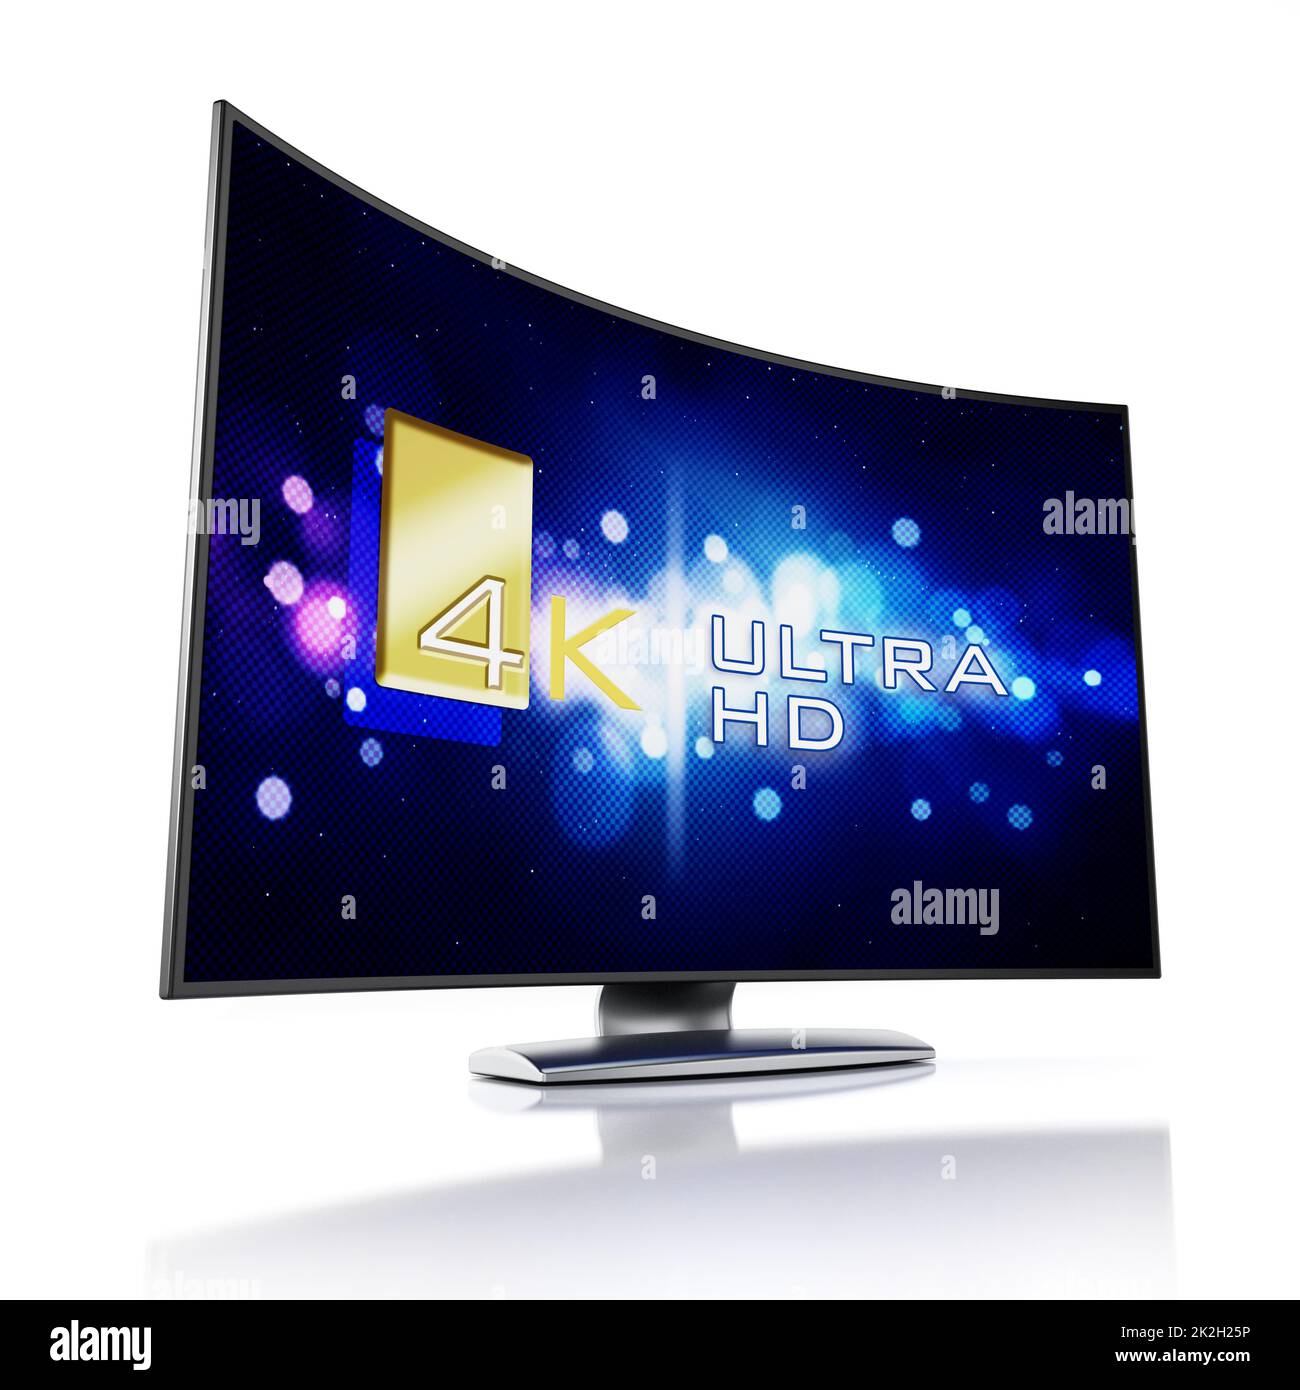 4K Ultra HD television Stock Photo